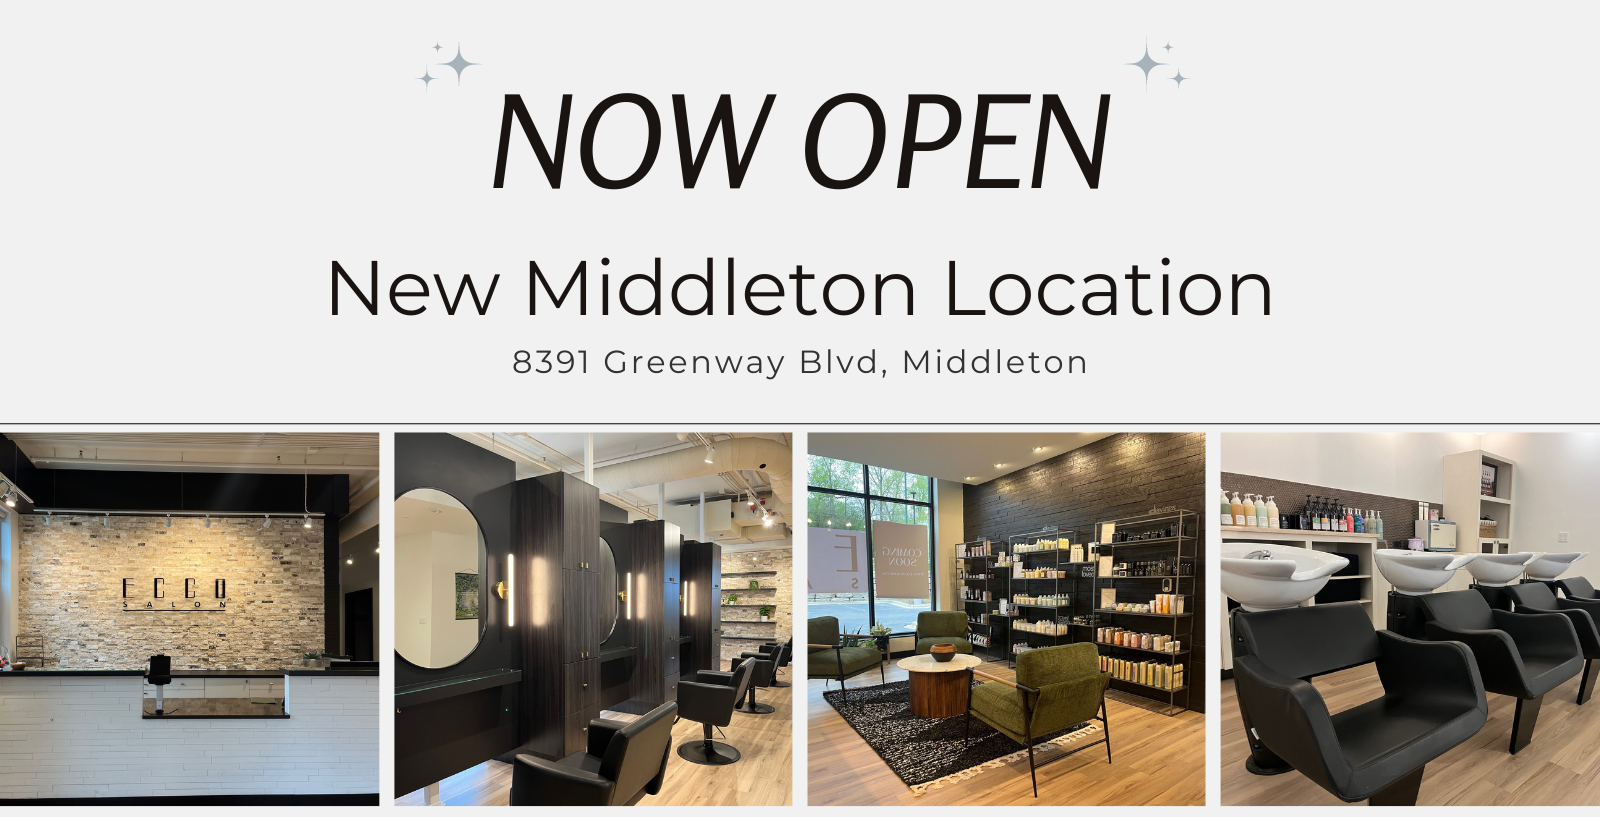 New Middleton Location